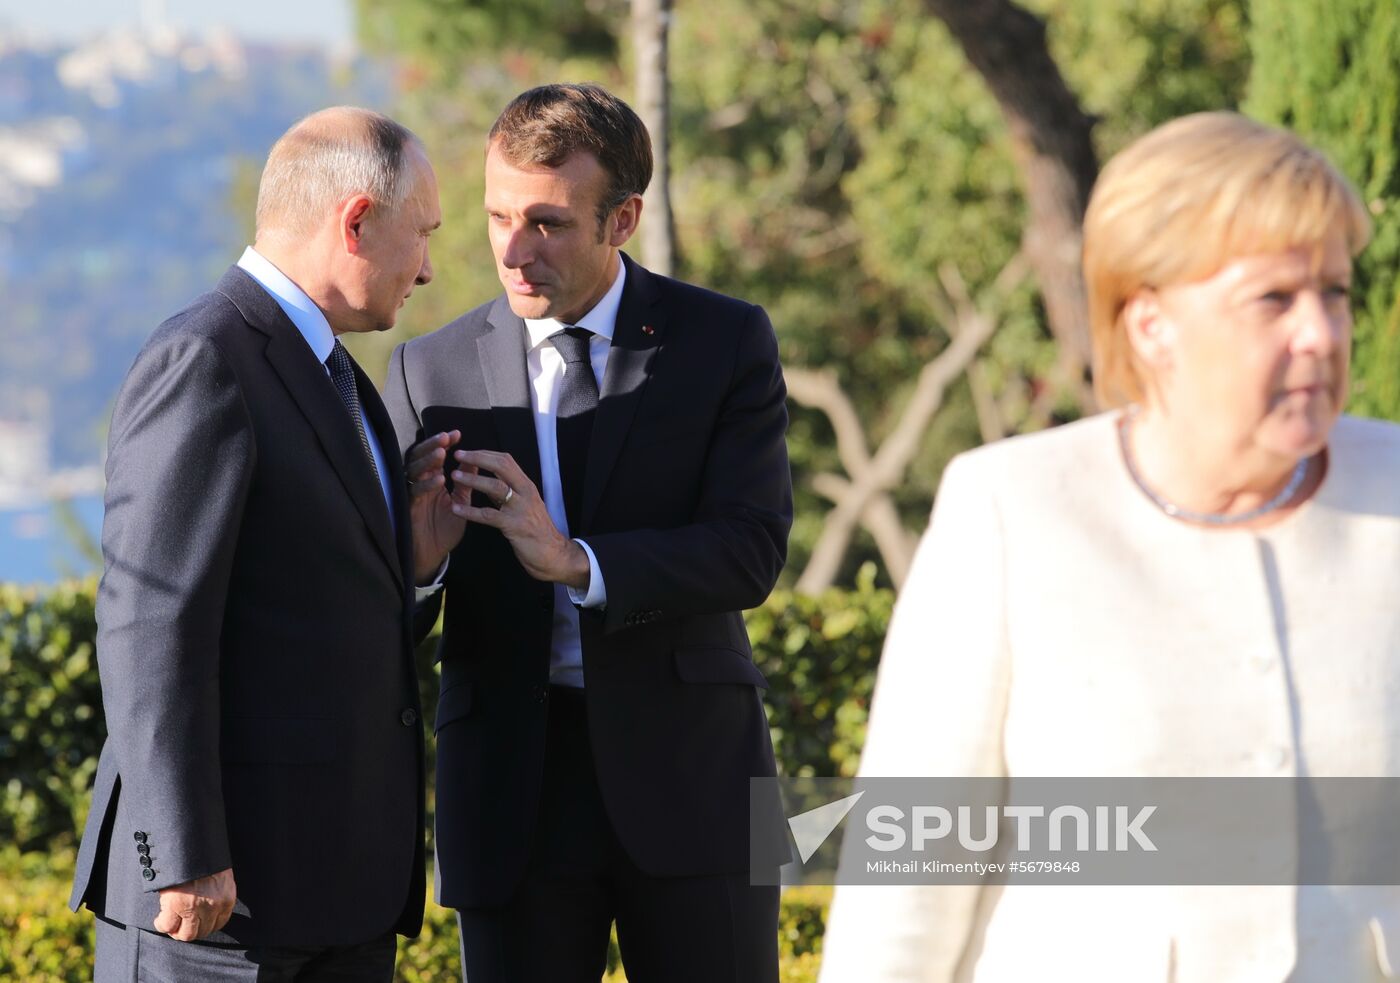 President Putin's visit to Turkey